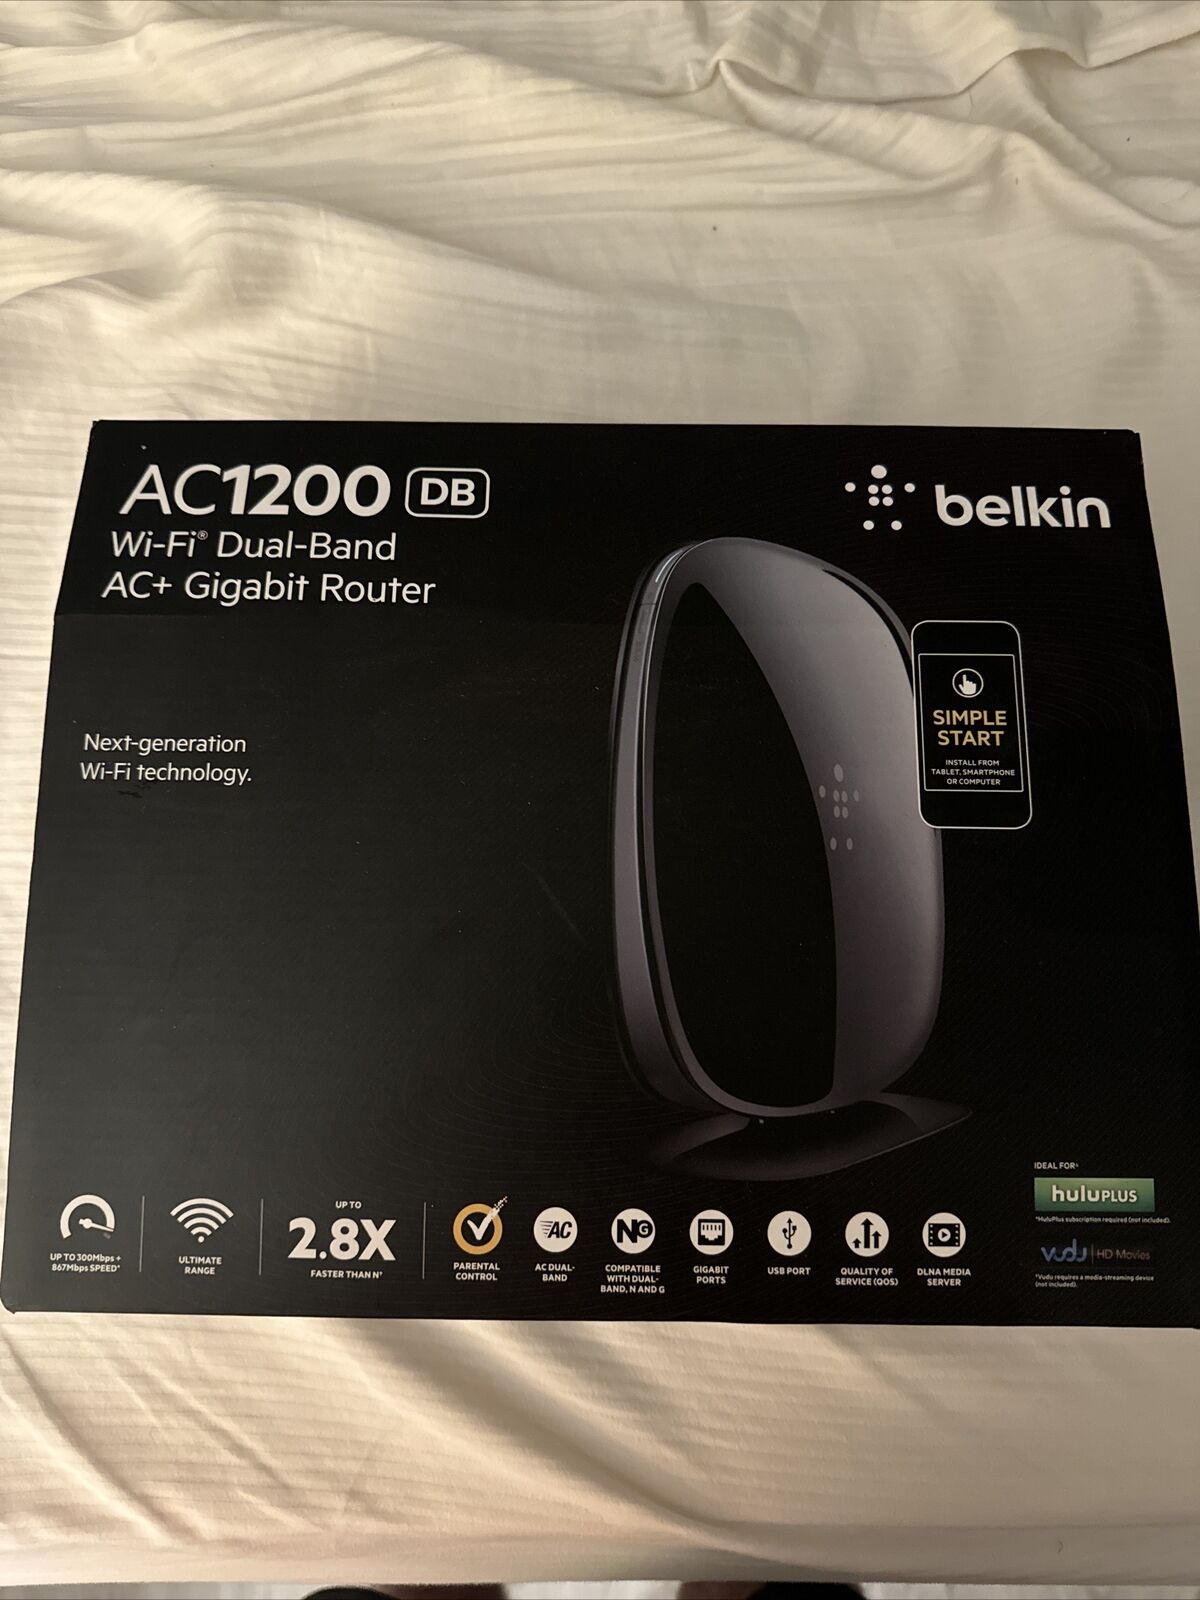 Belkin AC1200 DB Wi-Fi Dual-Band AC+ Gigabit Router F9K1113v4